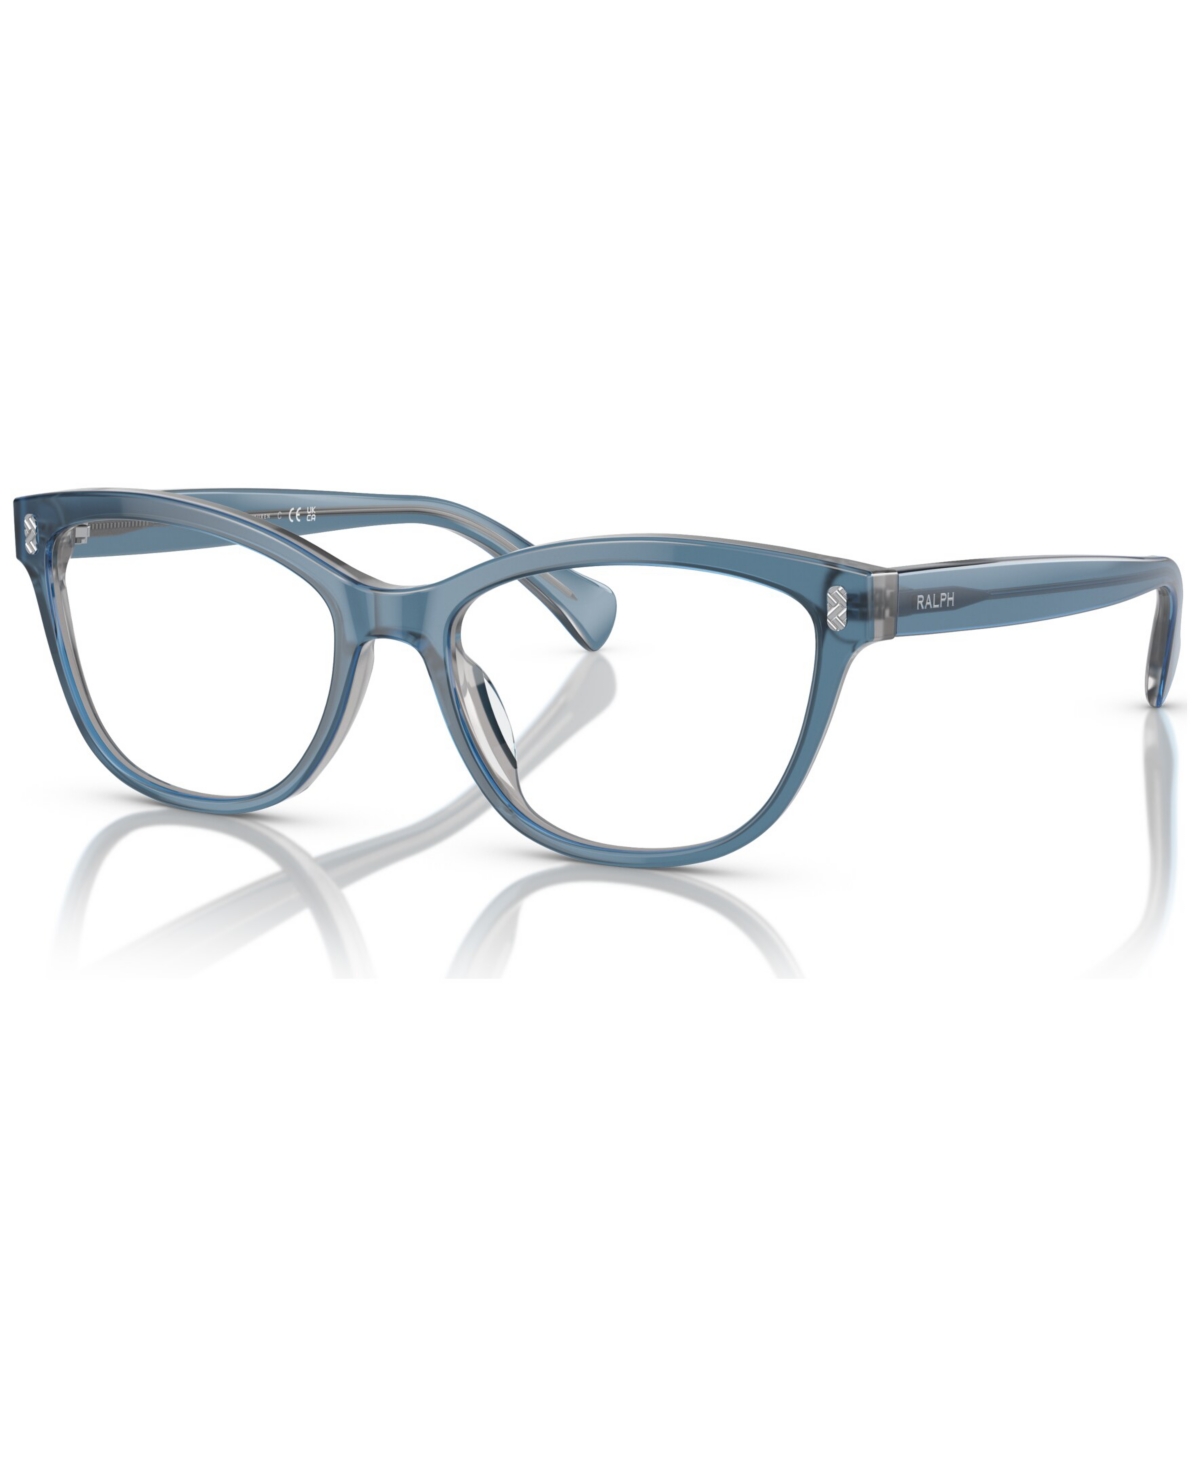 Women's Oval Eyeglasses, RA7152U 54 - Transparent Blue On Light Gray